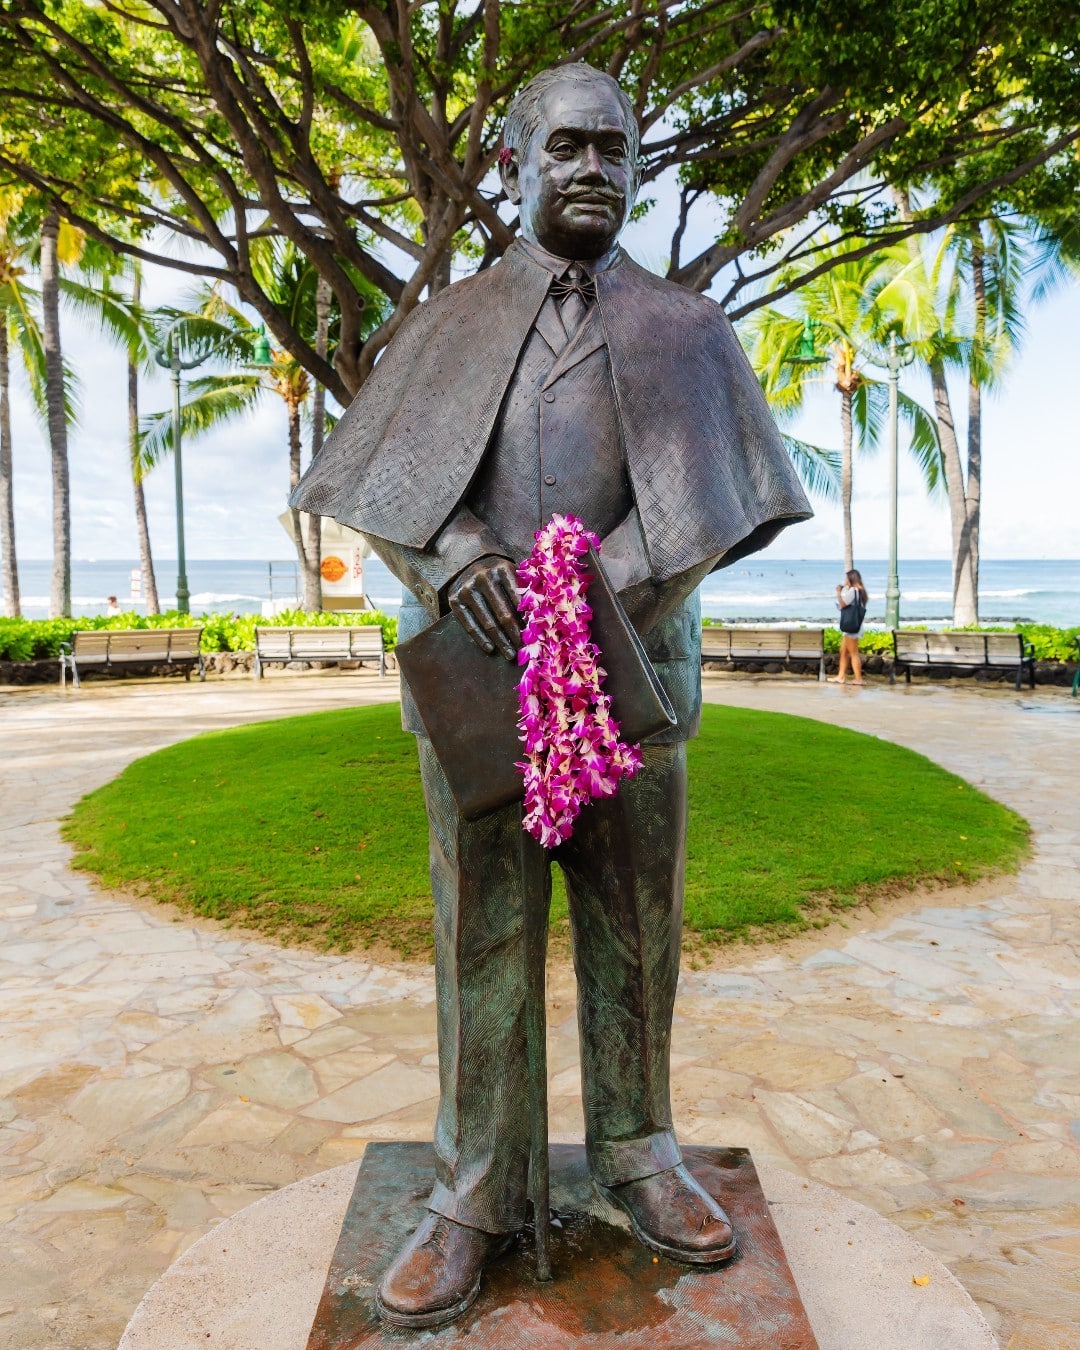 Happy Prince Kūhiō Day! Today, on his birthday, we honor Prince Jonah Kūhiō Kalanianaʻole and his many accomplishments in service of his people and the Hawaiian Islands.